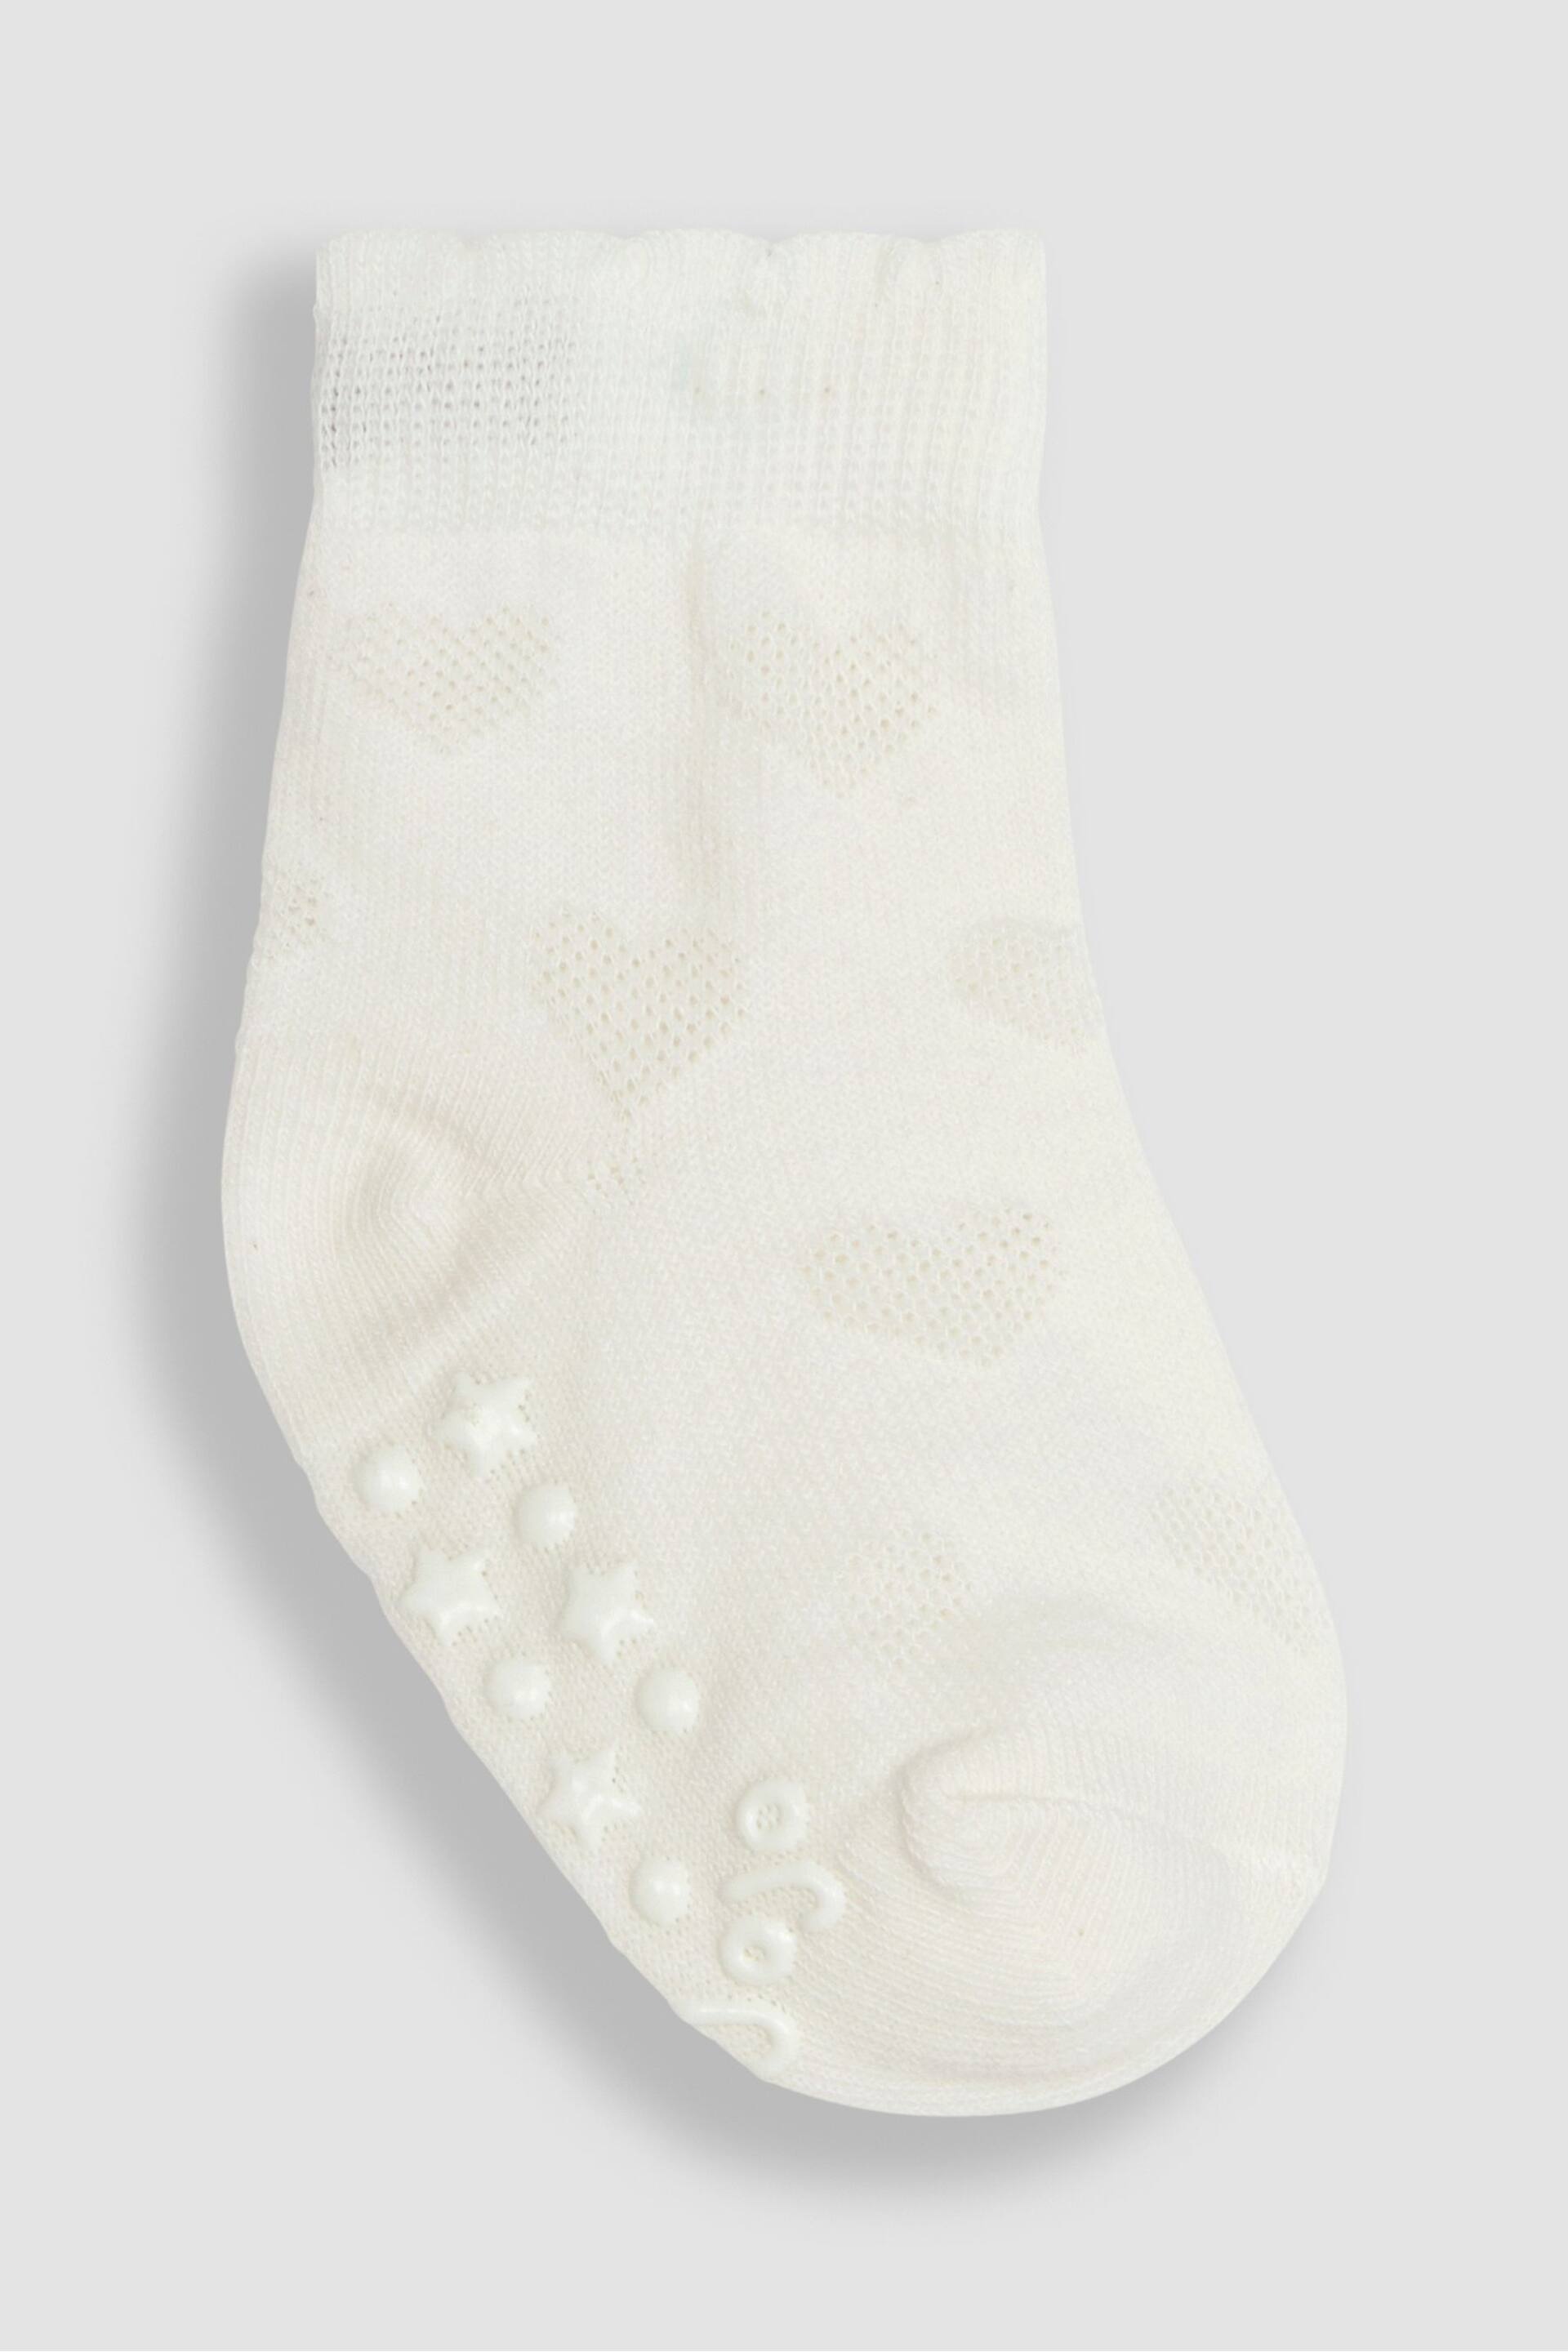 JoJo Maman Bébé Cream 3-Pack Heart Socks - Image 3 of 4